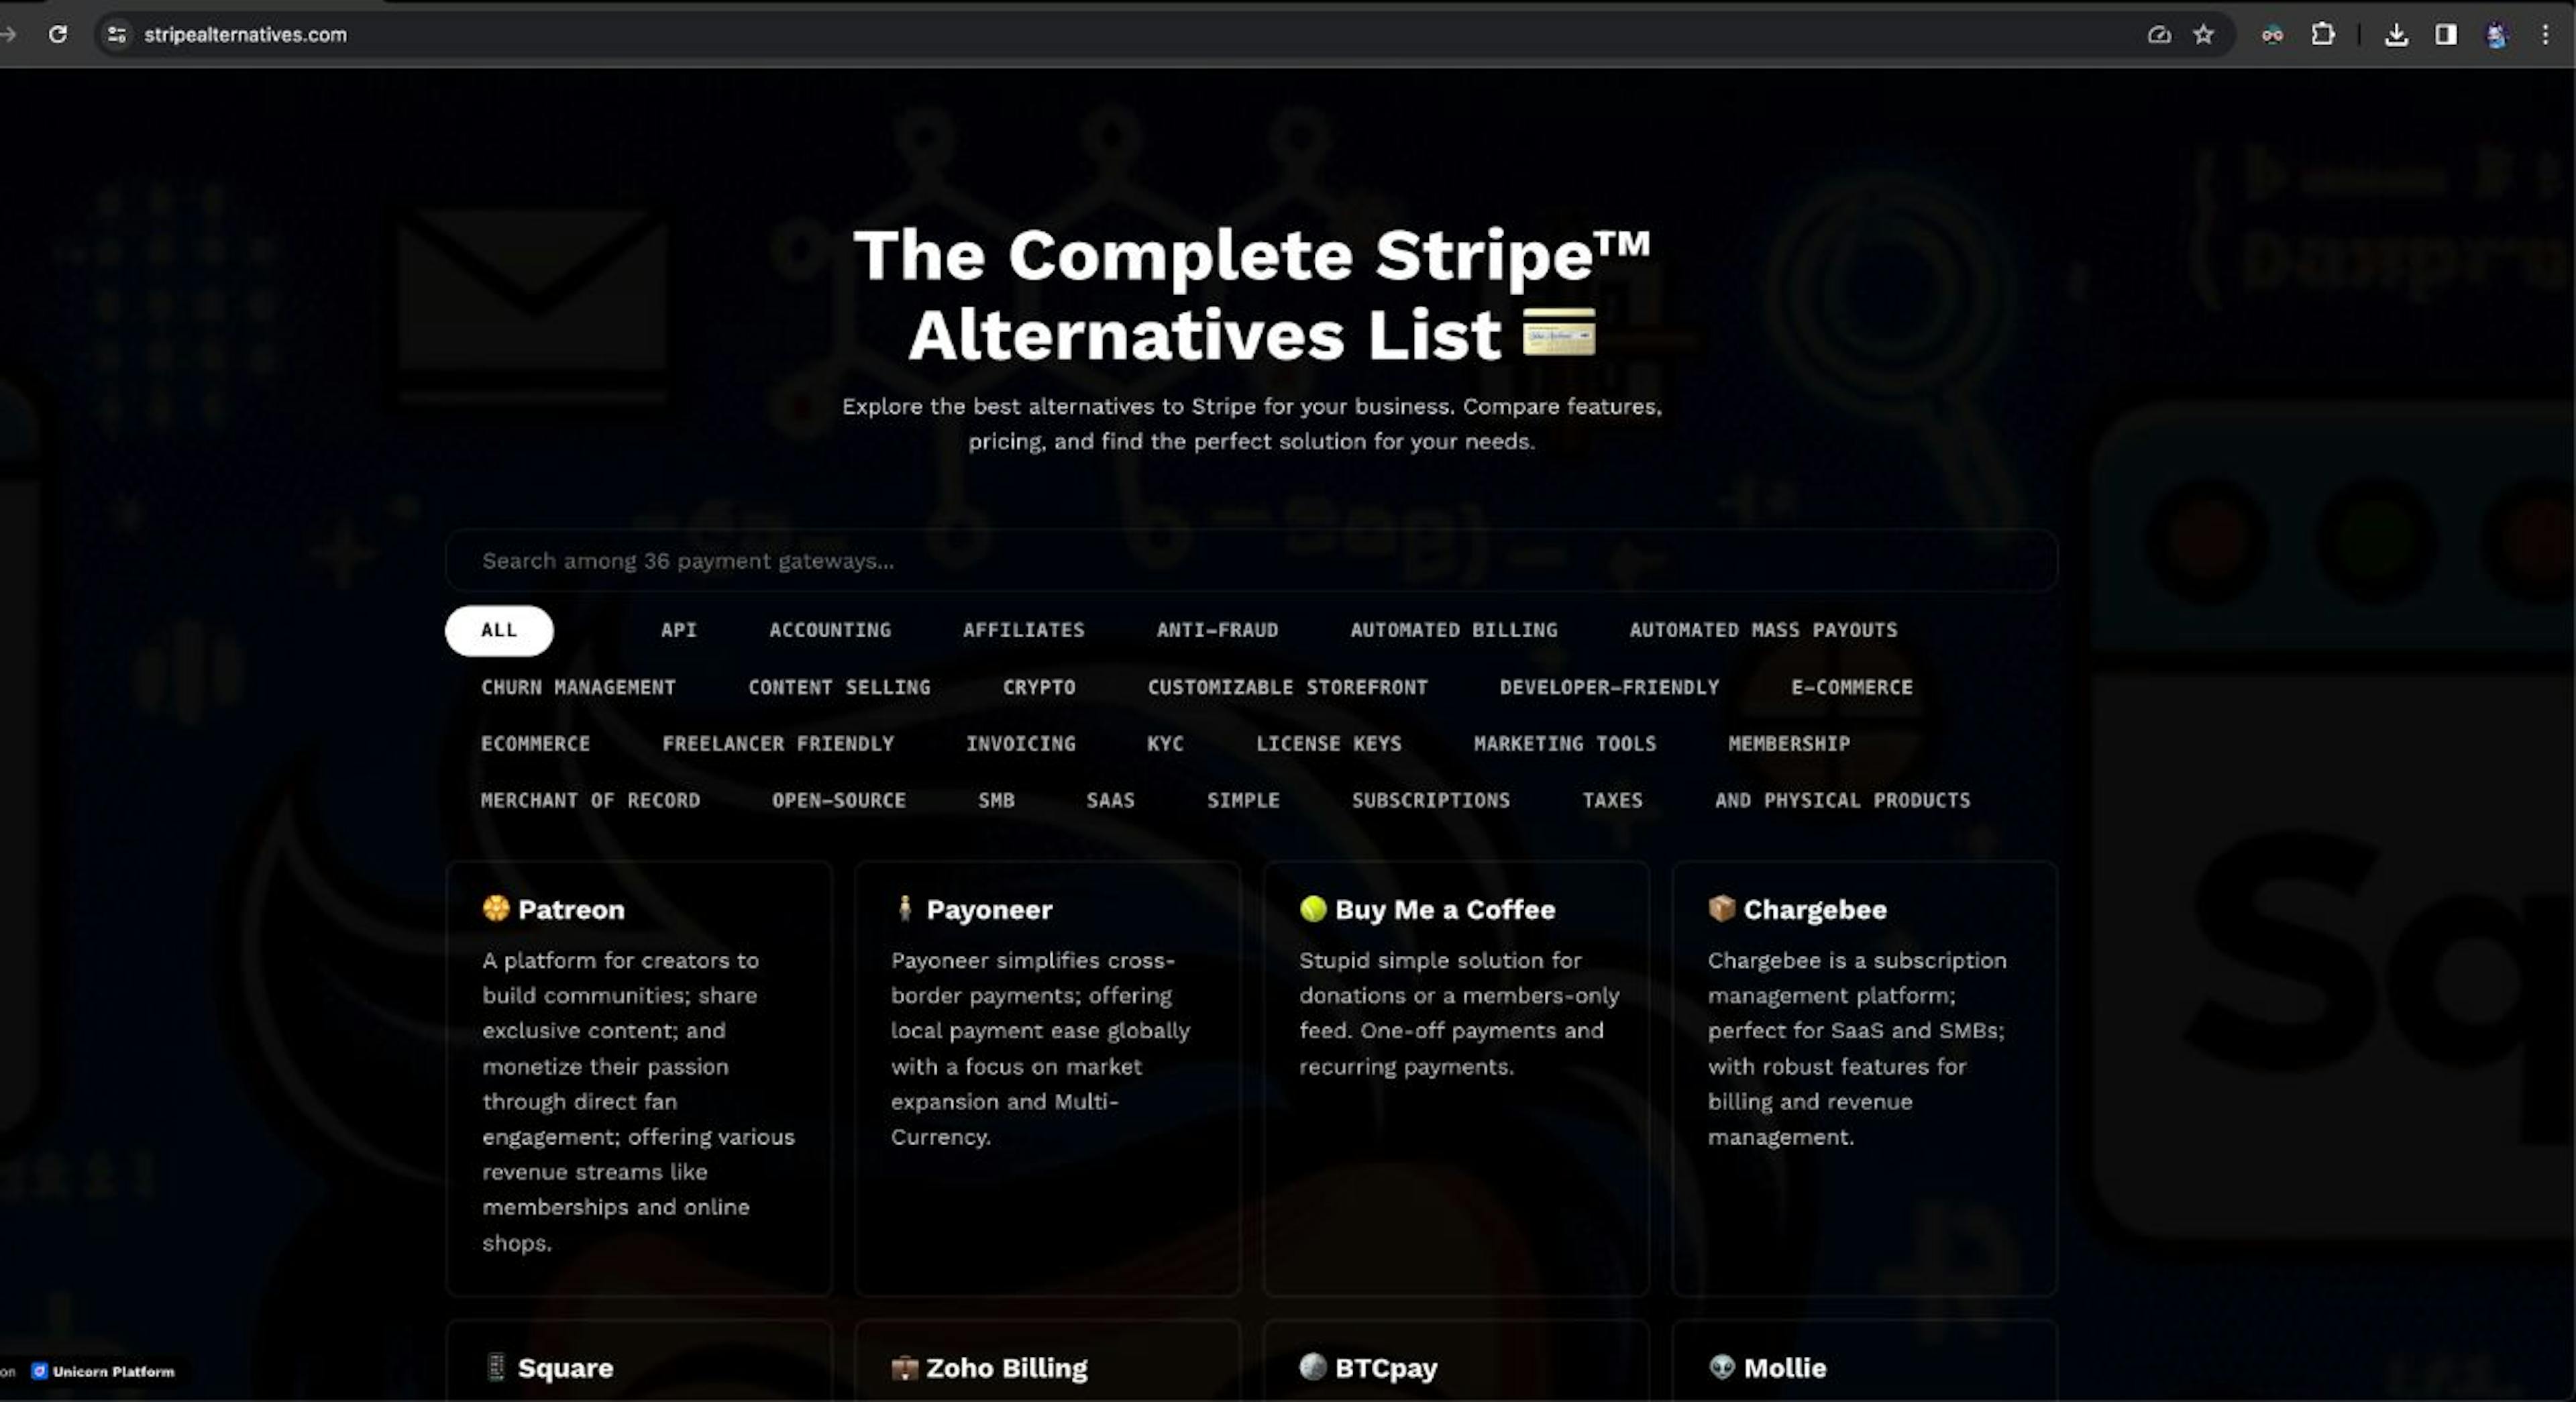 StripeAlternatives.com, my side-project